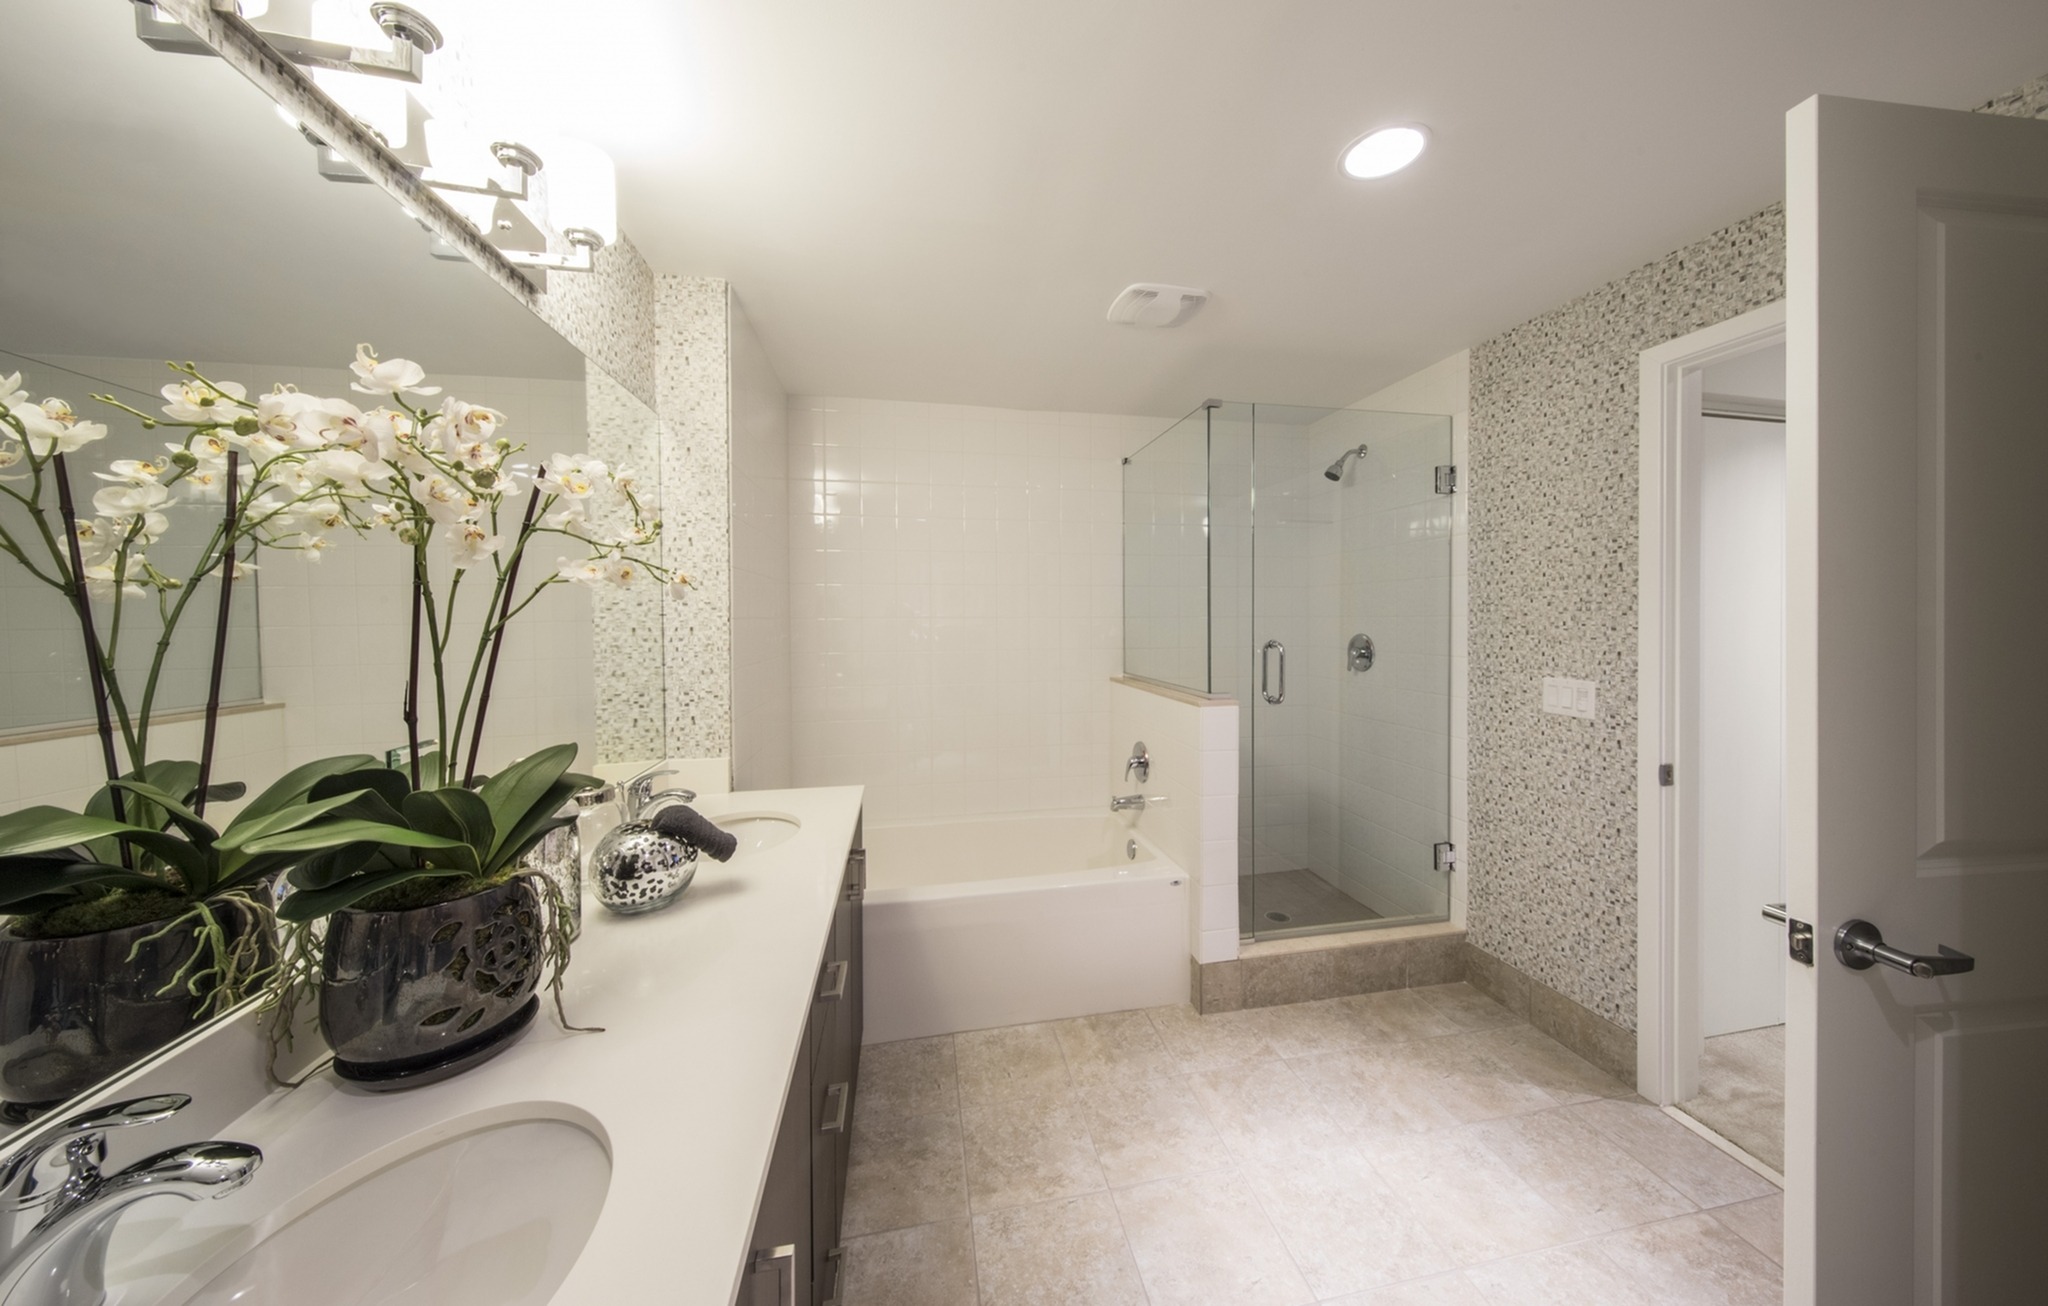 Spacious baths with frameless glass-enclosure showers